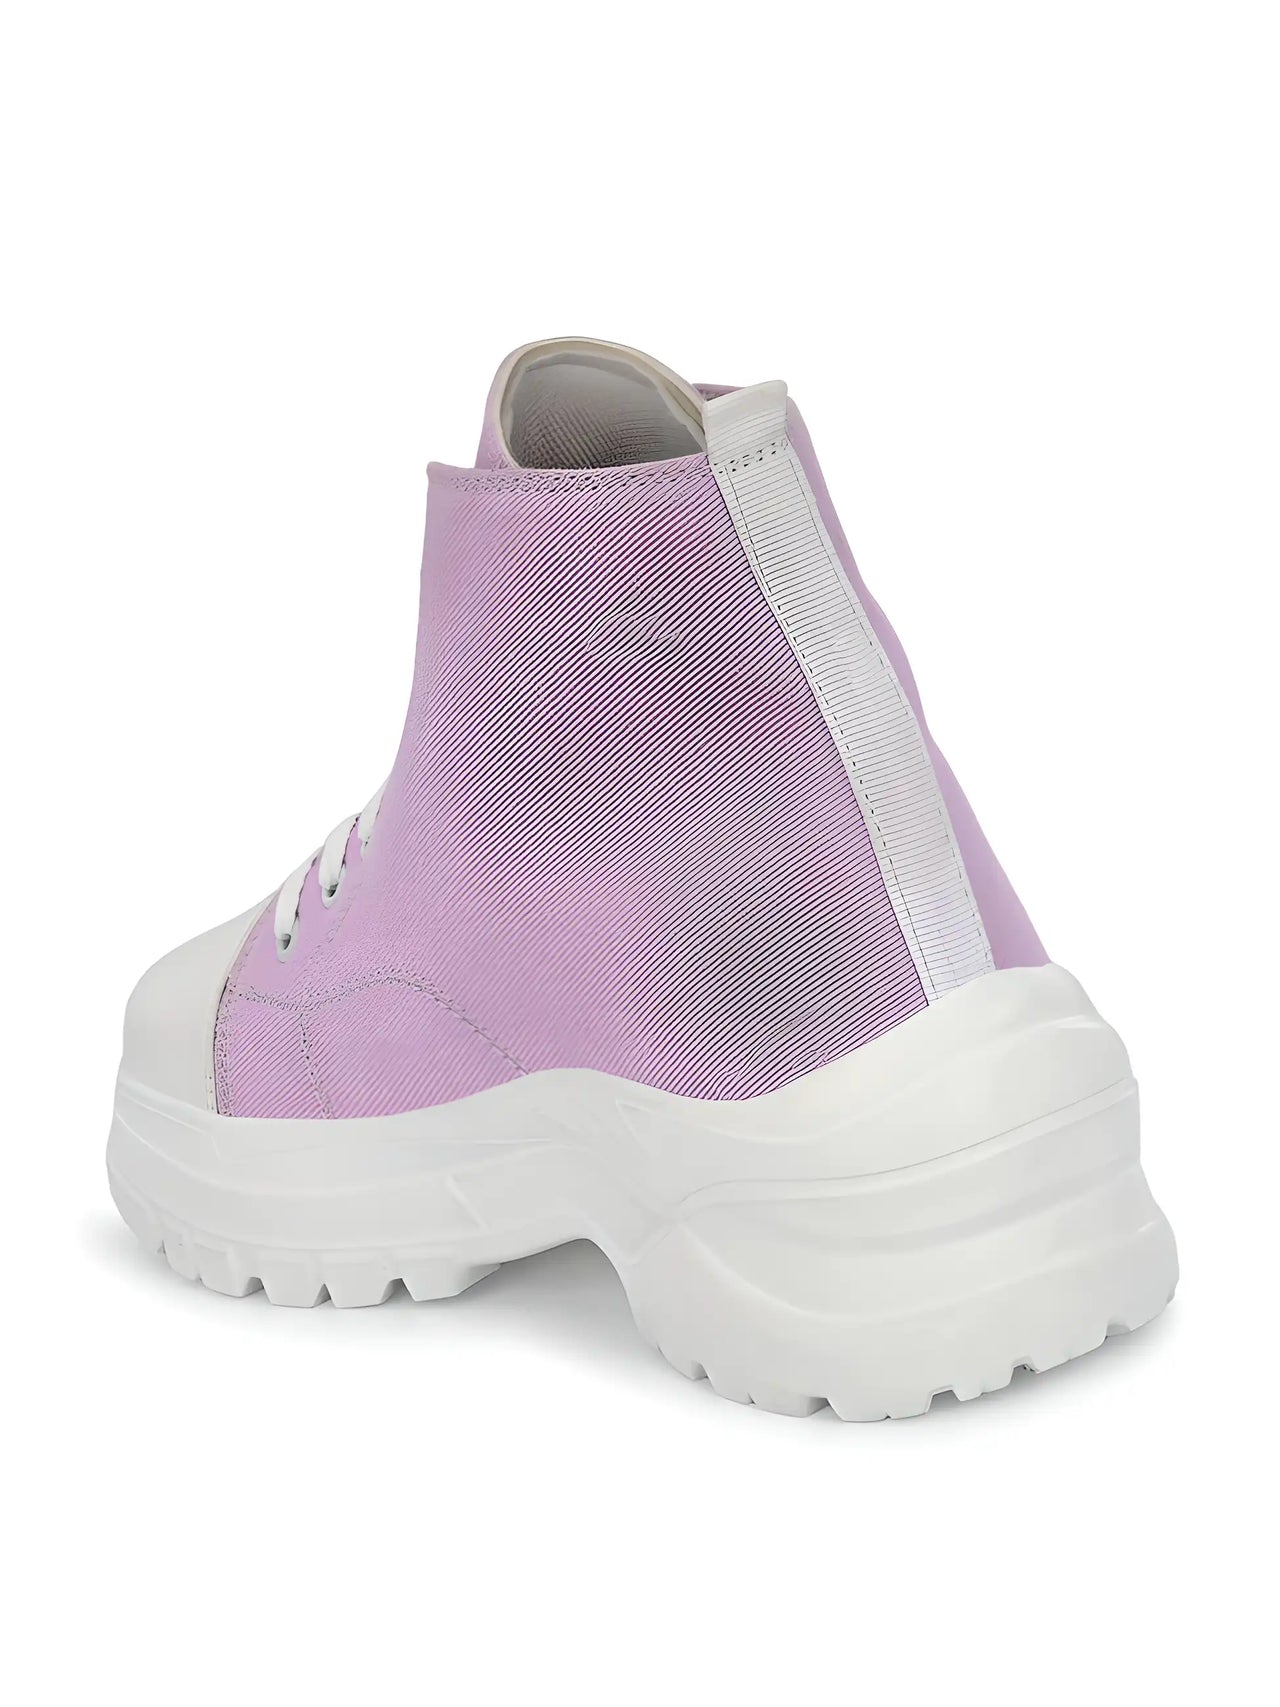 BUCIK Women's Purple Synthetic leather Lace-Up Casual Shoes